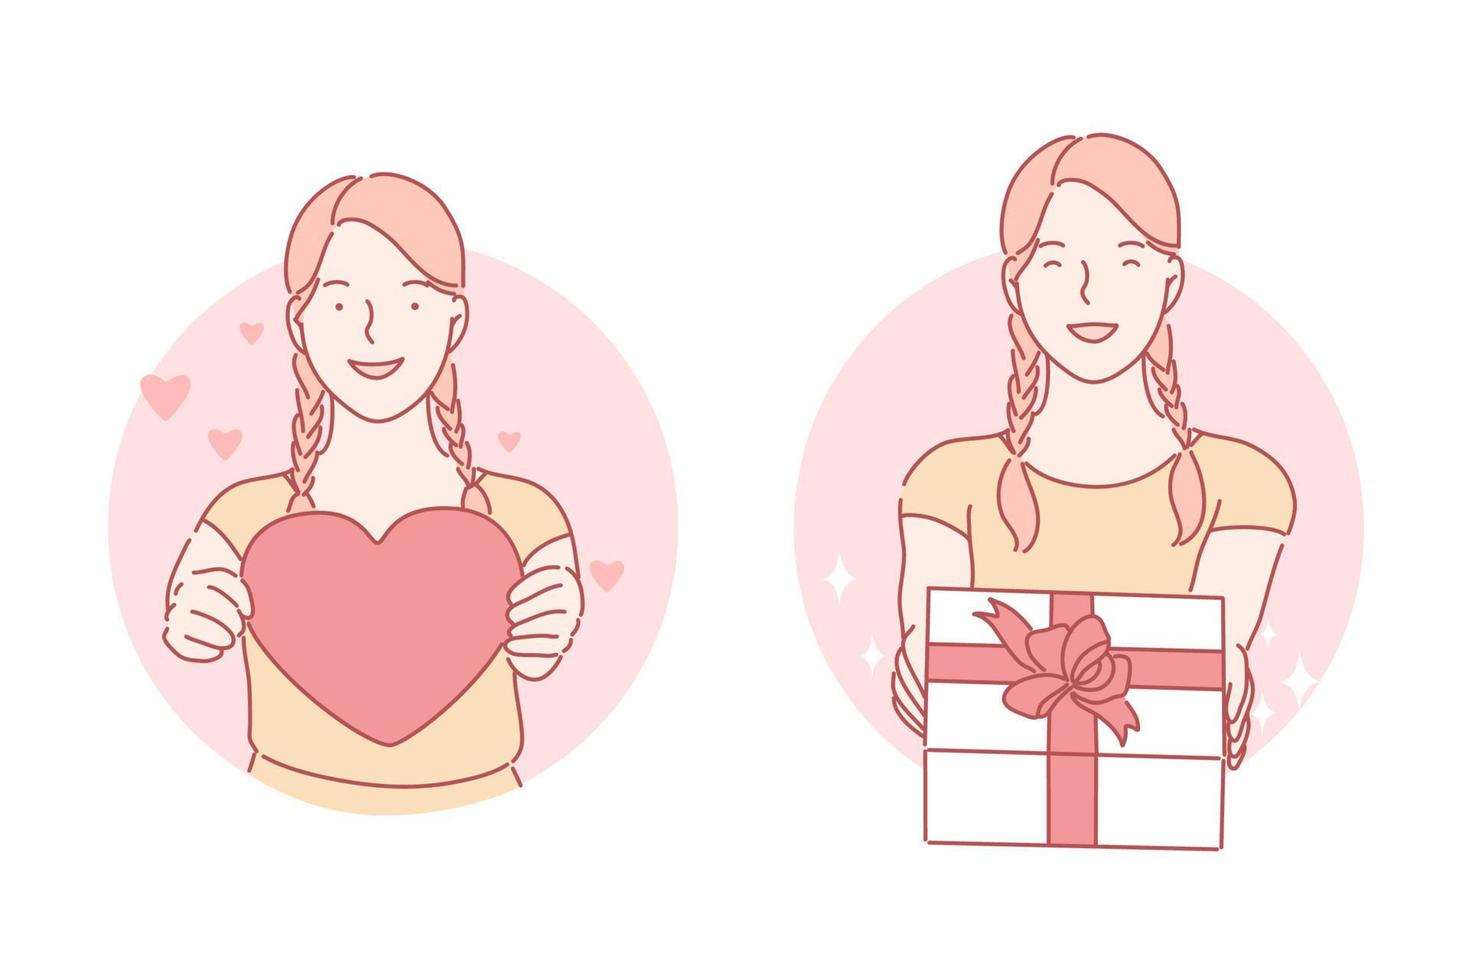 Heart, gift, birthday set concept vector